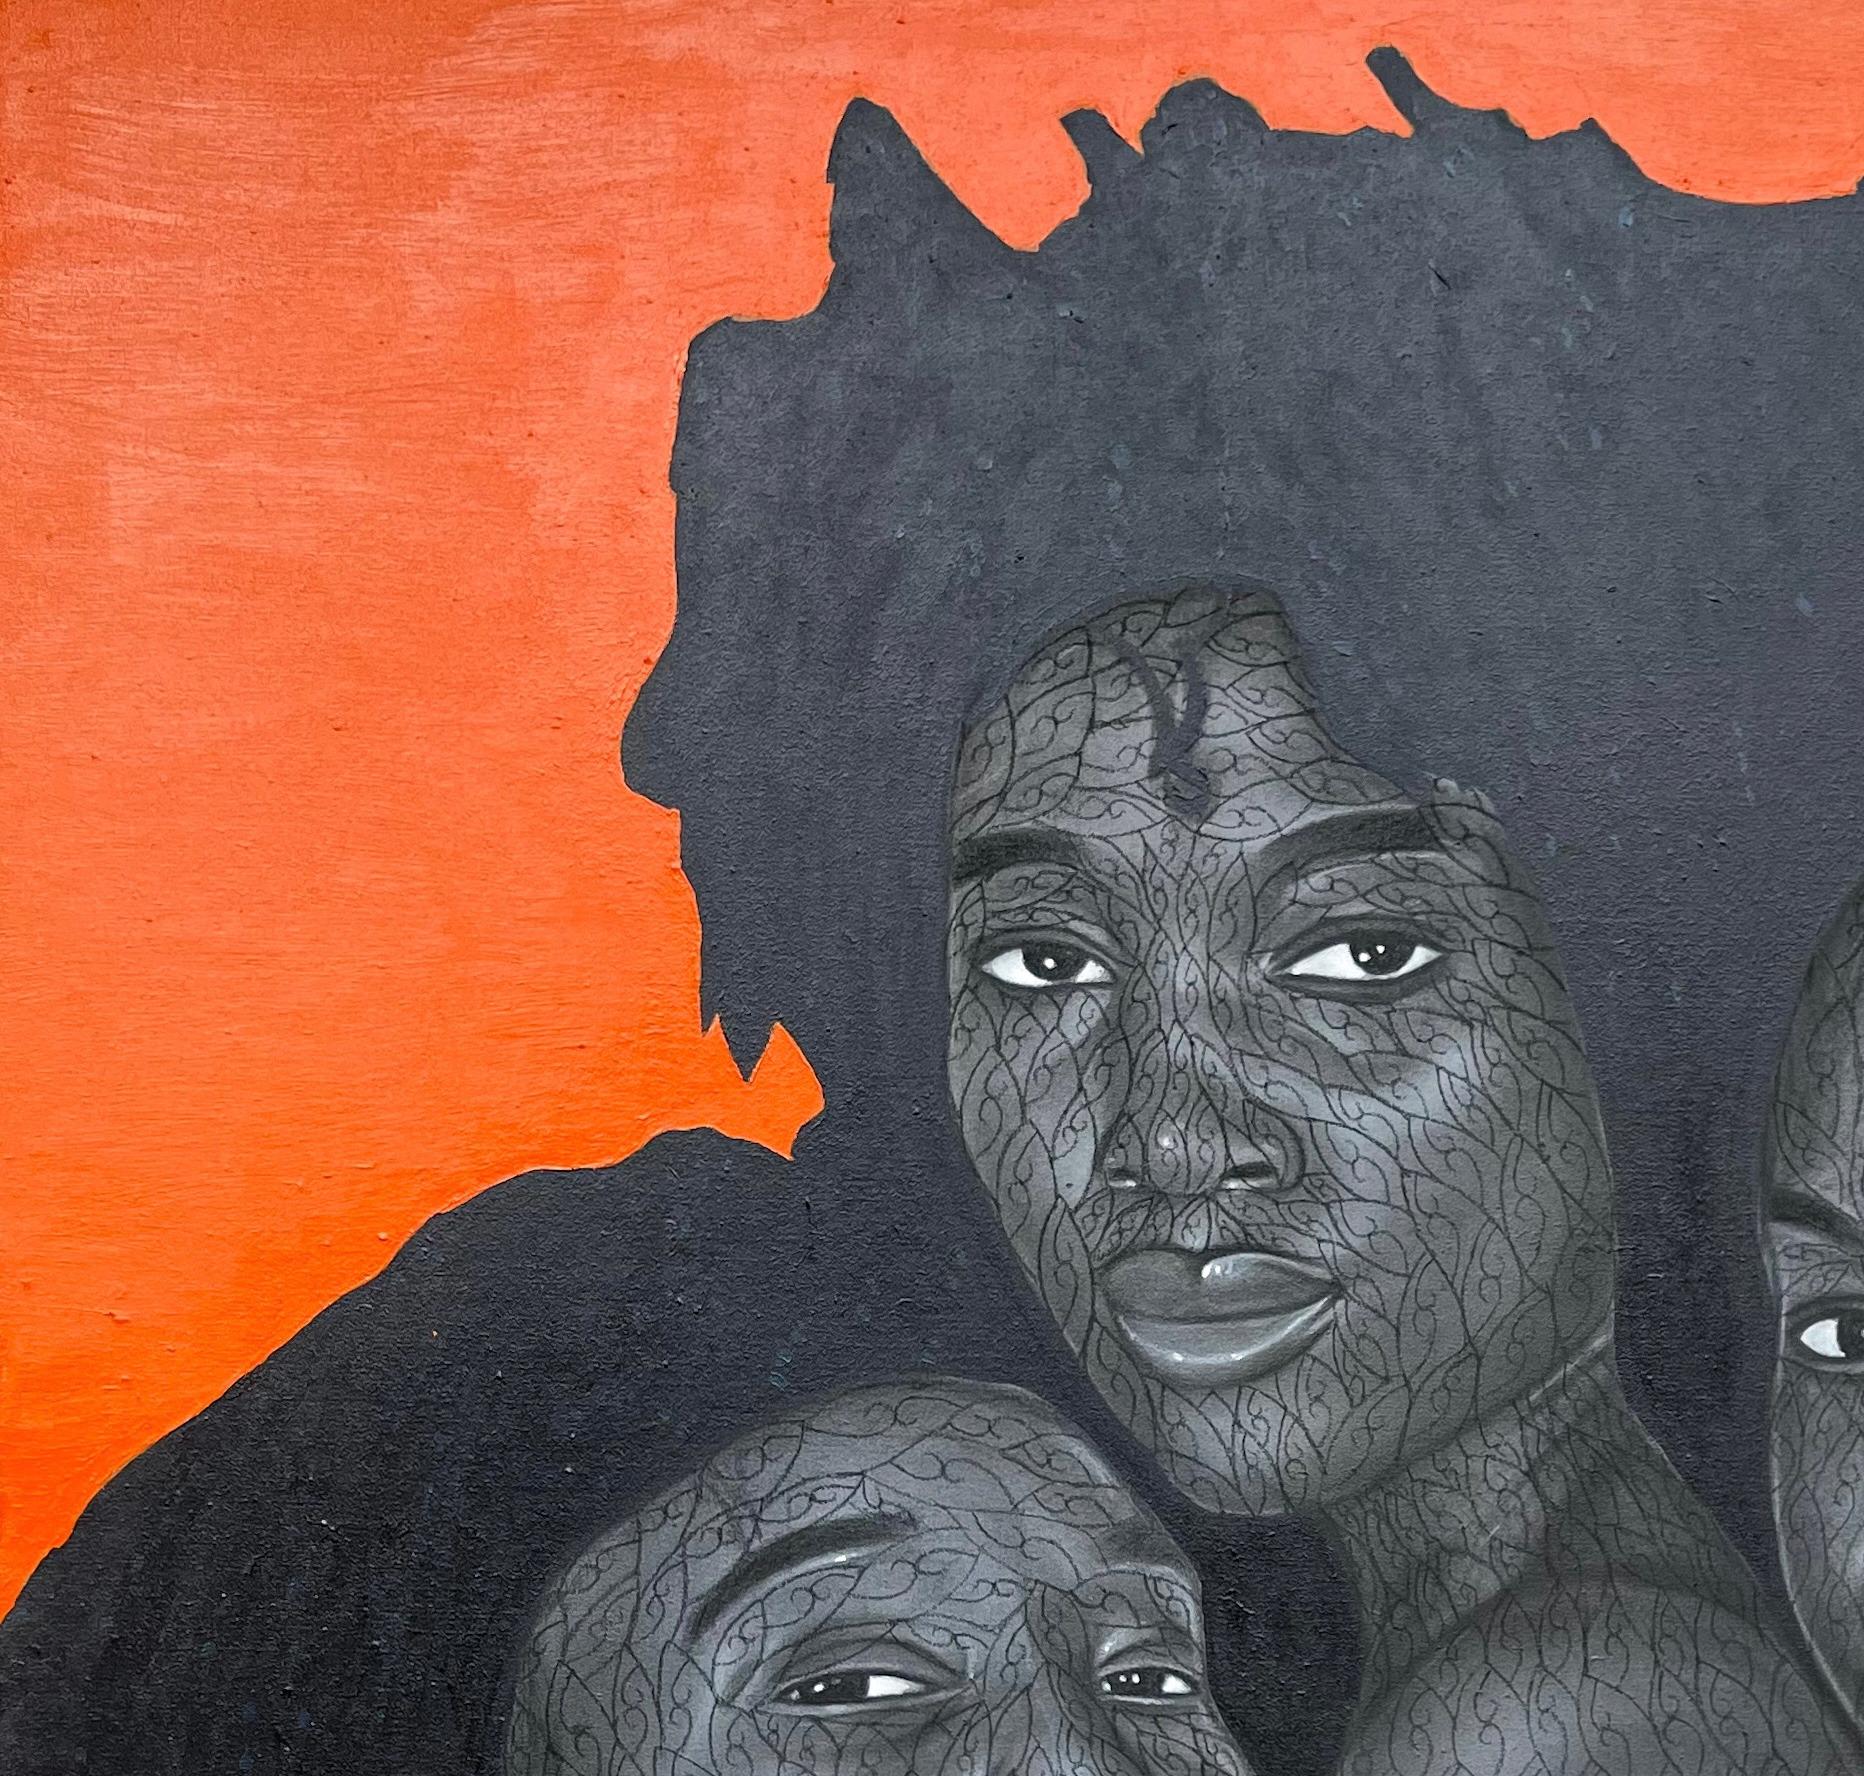 Sisterhood (The Love We Share) 3 - Painting by Taiwo Odejinmi